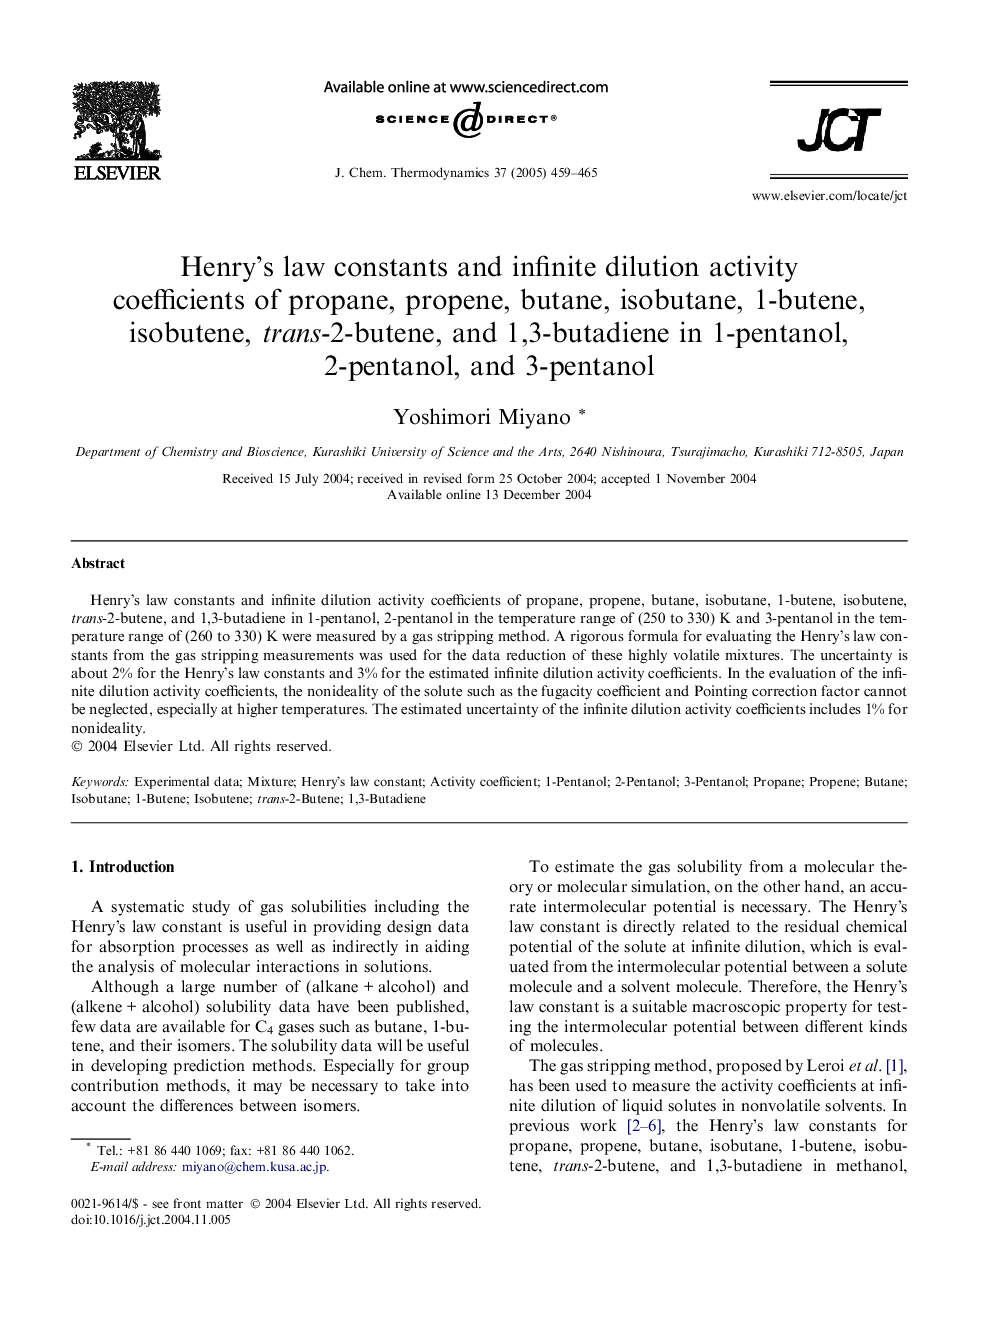 Henry's law constants and infinite dilution activity coefficients of propane, propene, butane, isobutane, 1-butene, isobutene, trans-2-butene, and 1,3-butadiene in 1-pentanol, 2-pentanol, and 3-pentanol